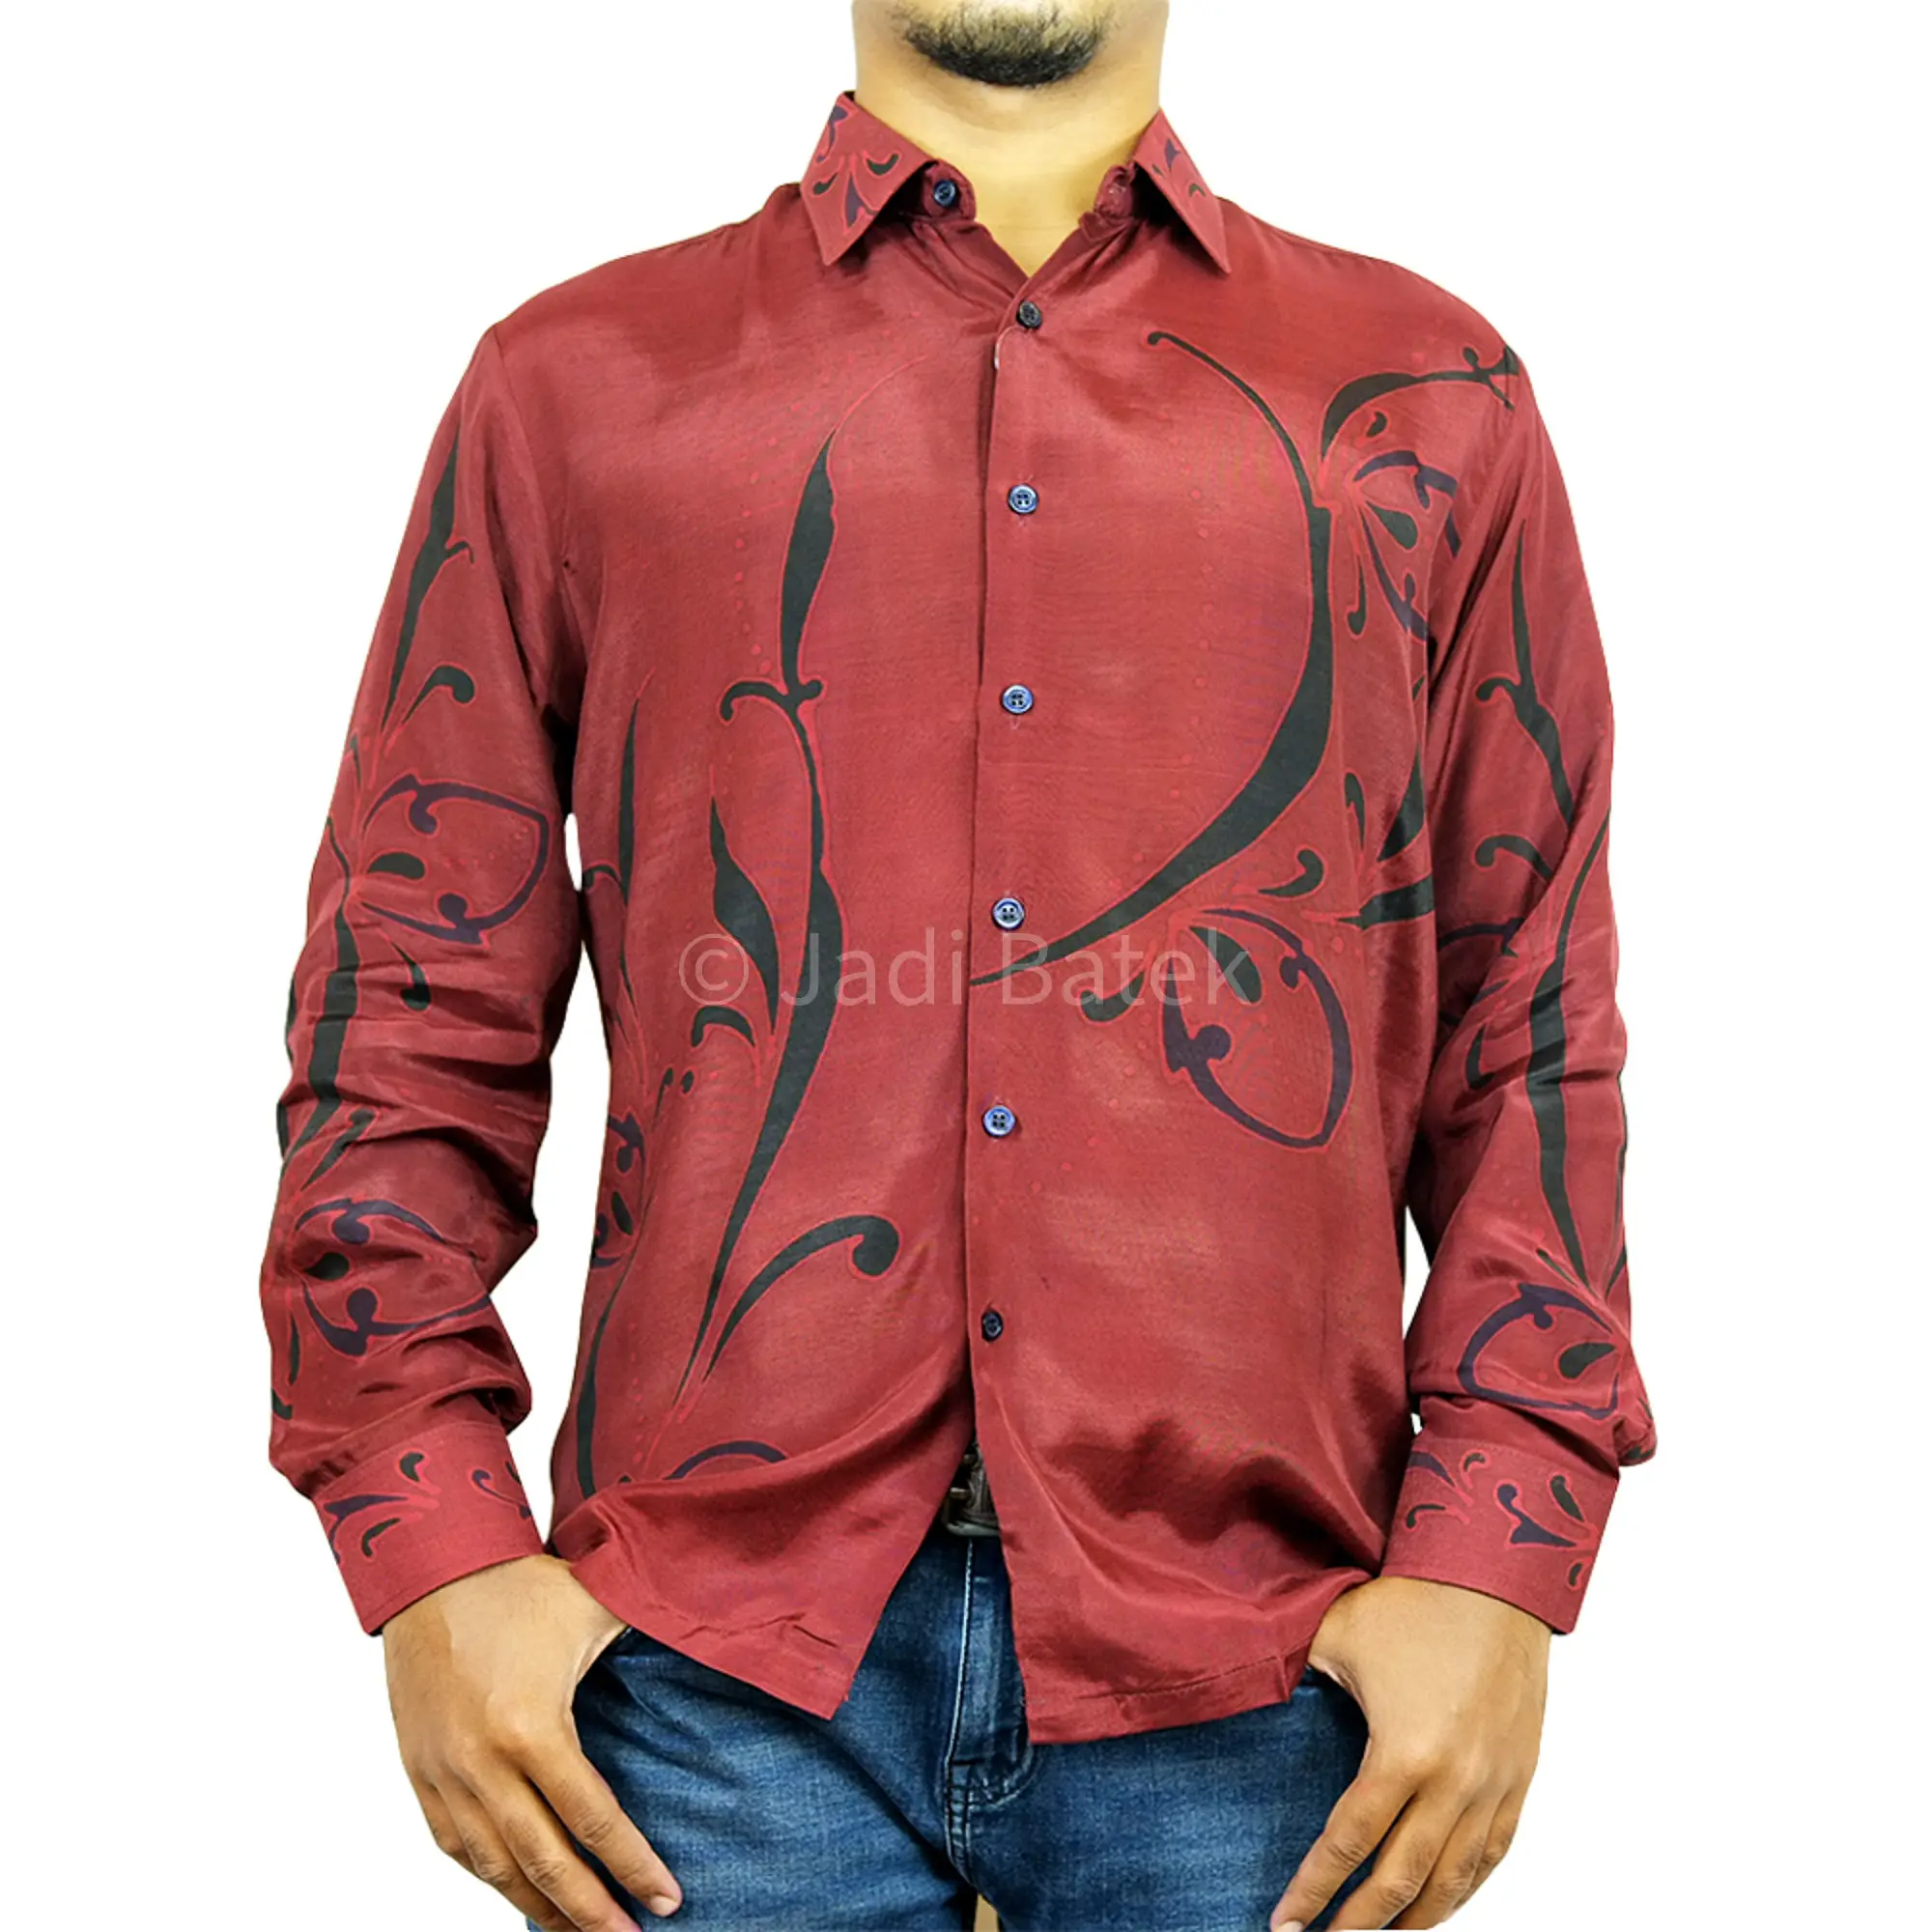 Baju Batik Lengan Panjang Pria, Baju Katun Gaya Malaysia, Baju Pria Lengan Panjang, Motif Tangan Merah